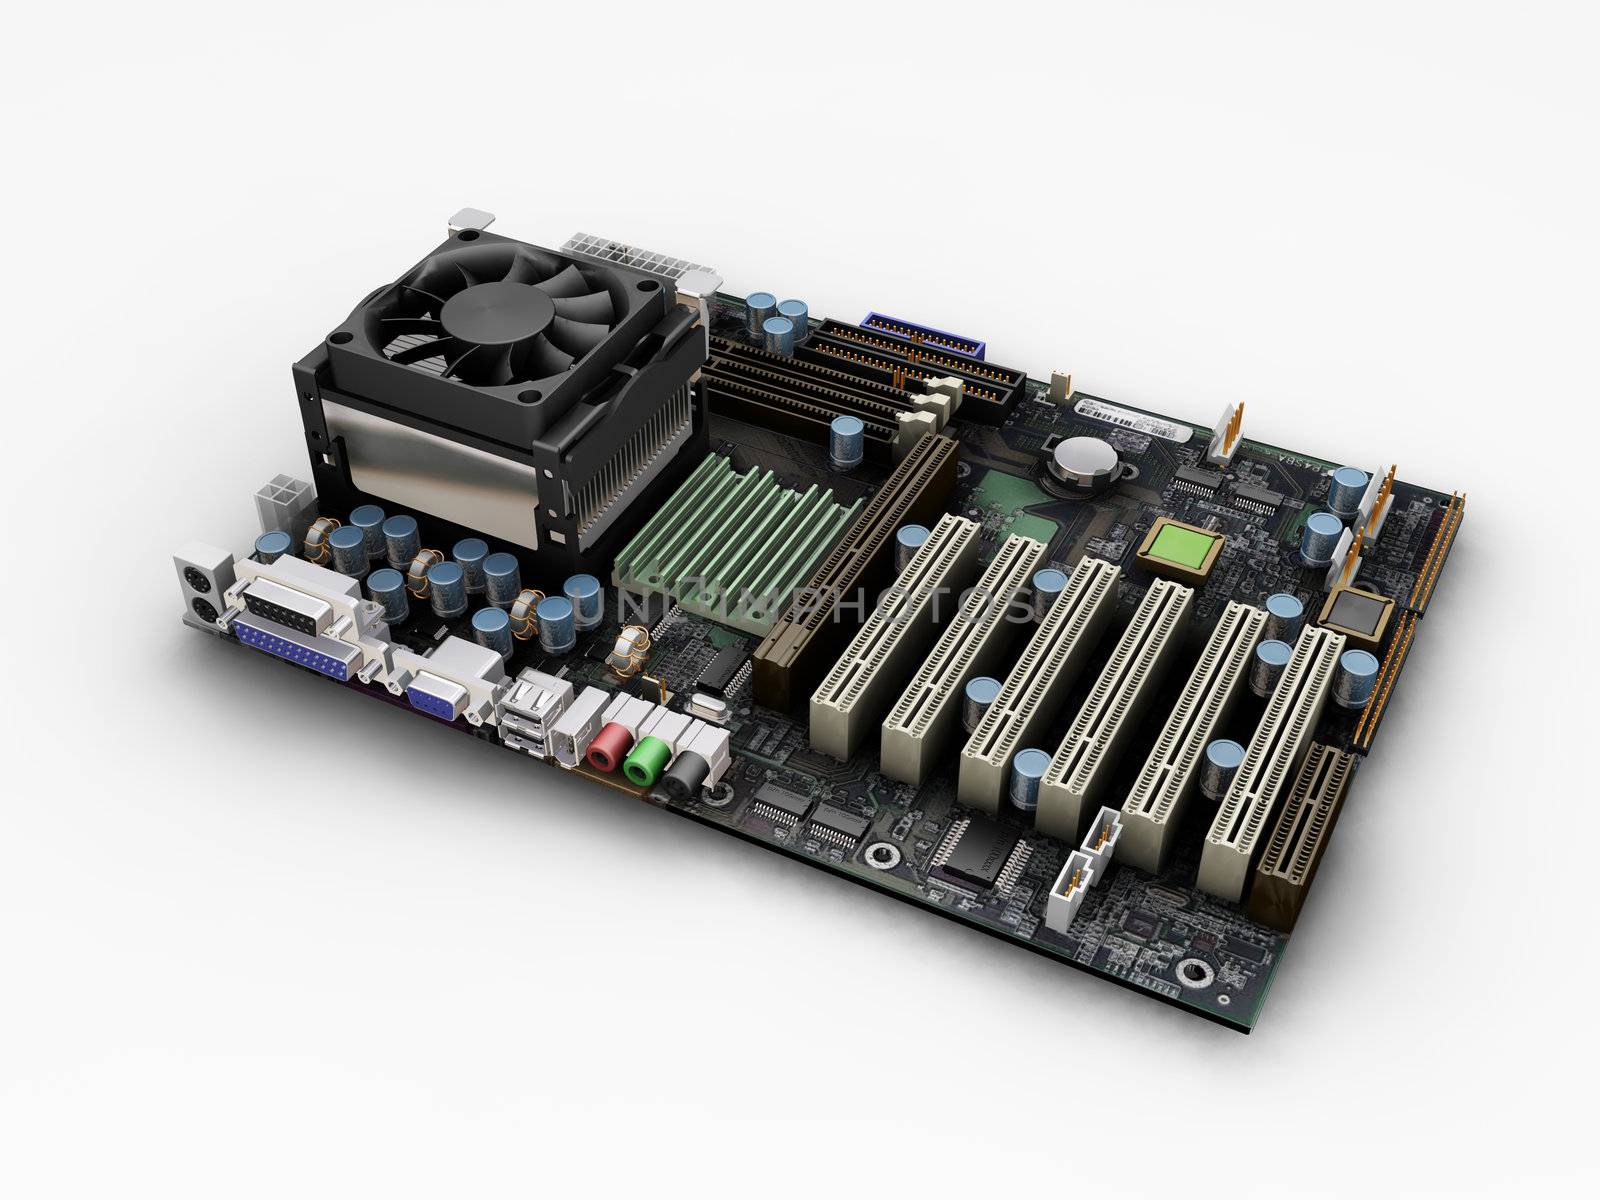 3D render of a motherboard